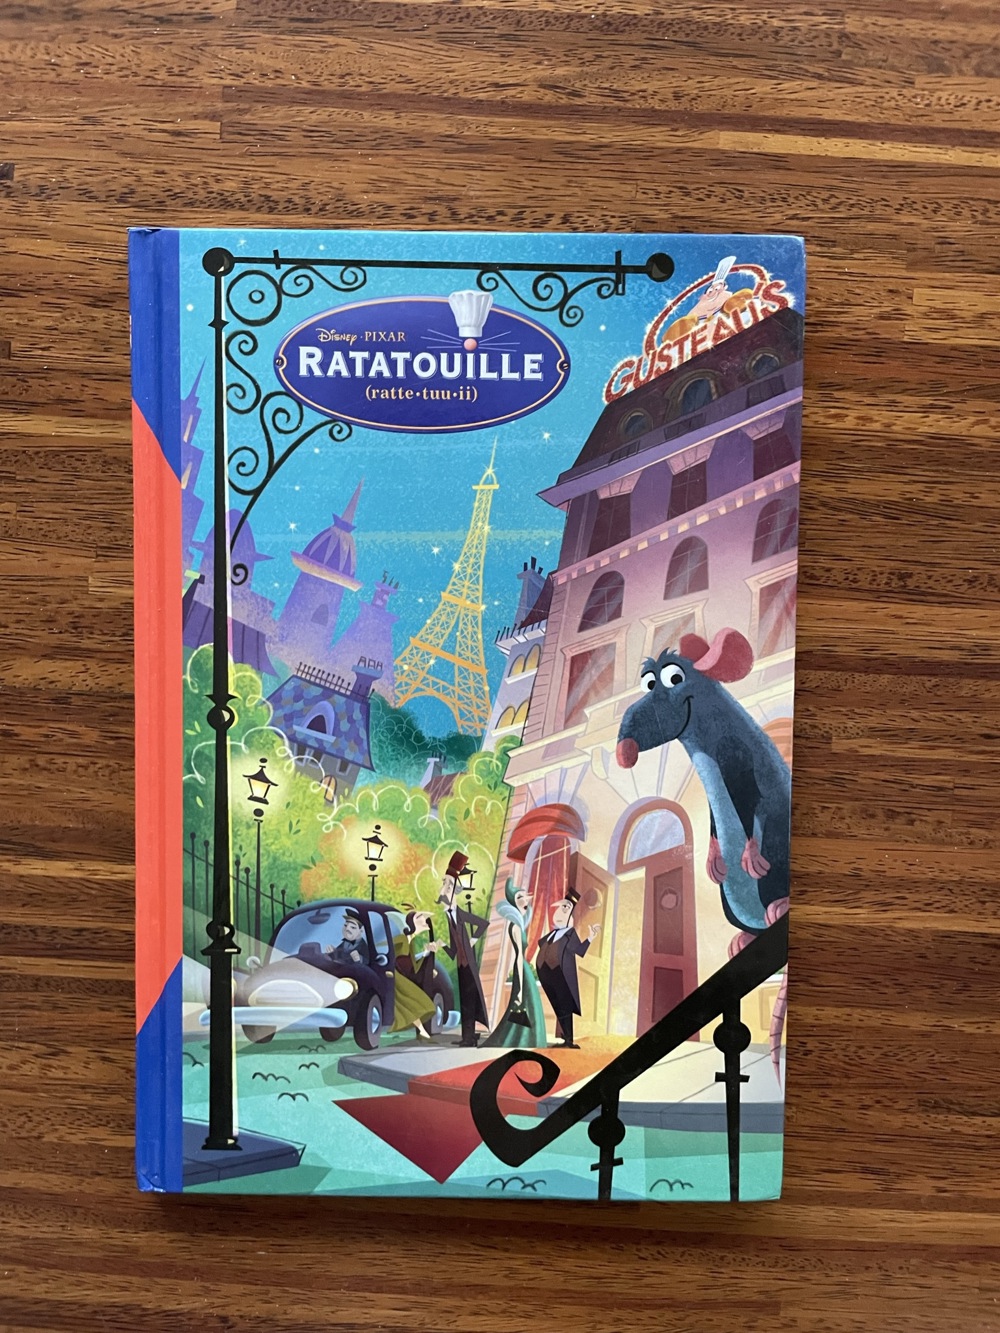 Buch zum Film "Ratatouille" (Disney  Pixar)